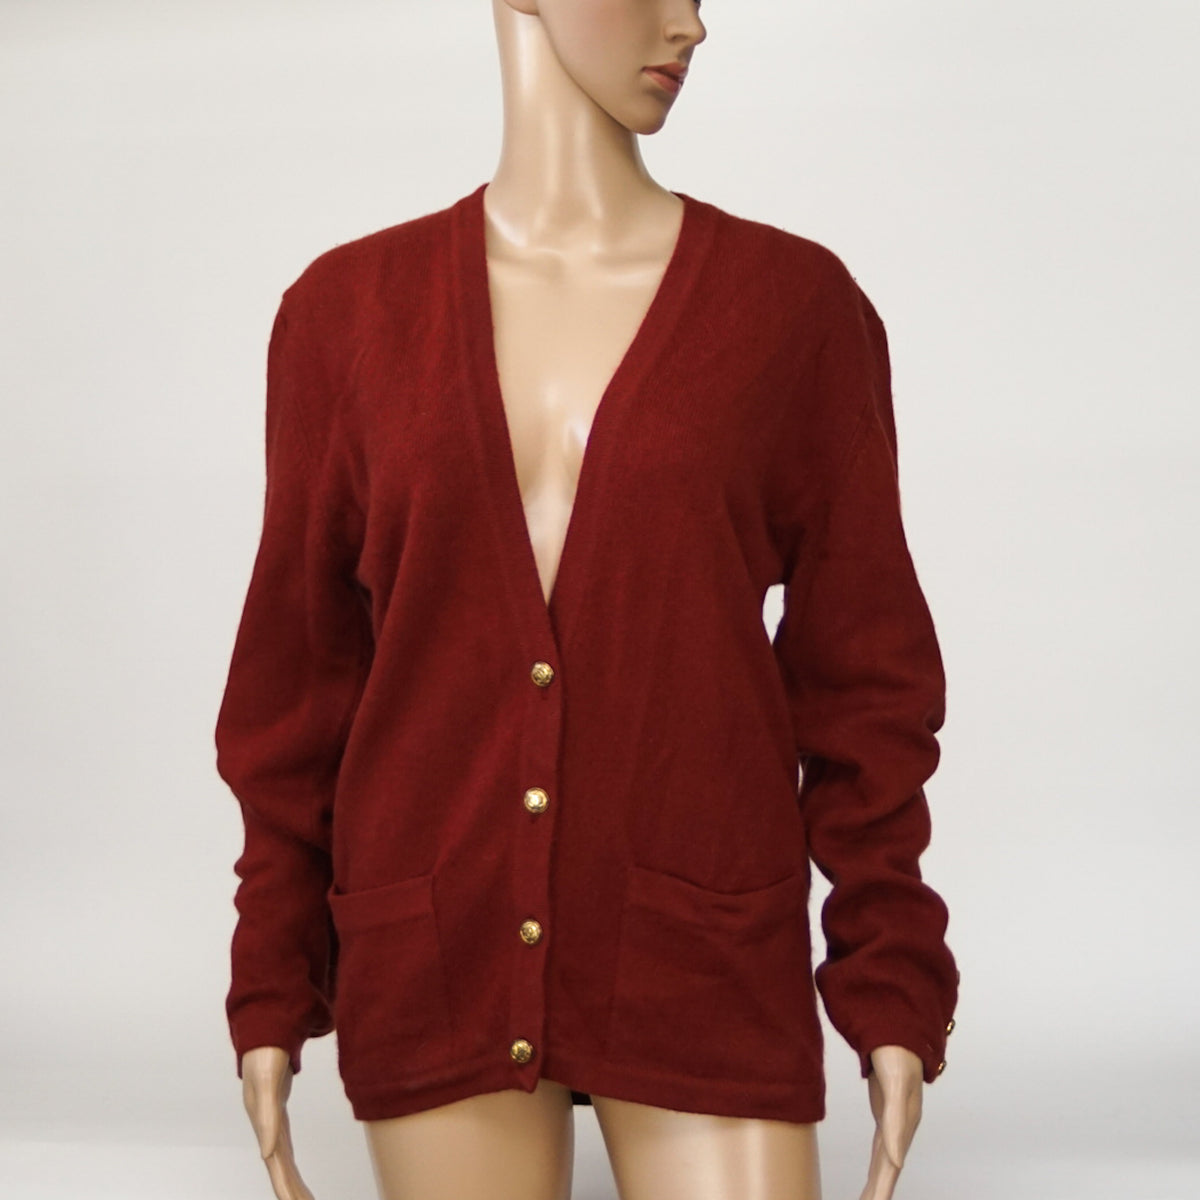 Louis Vuitton Print Coral Cardigan Size 40 (FR) - 78% off